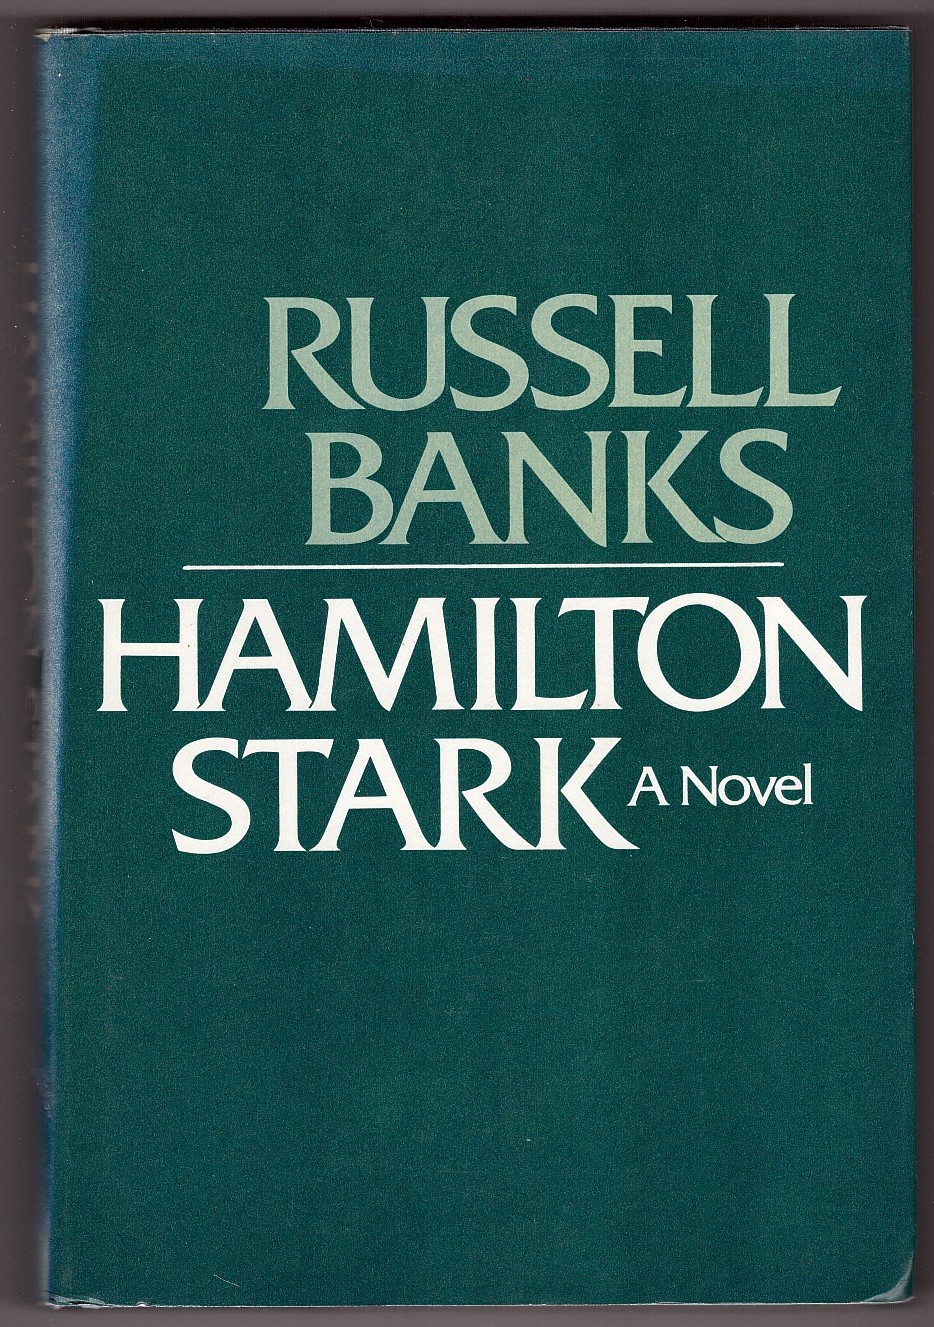 BANKS, RUSSELL - Hamilton Stark